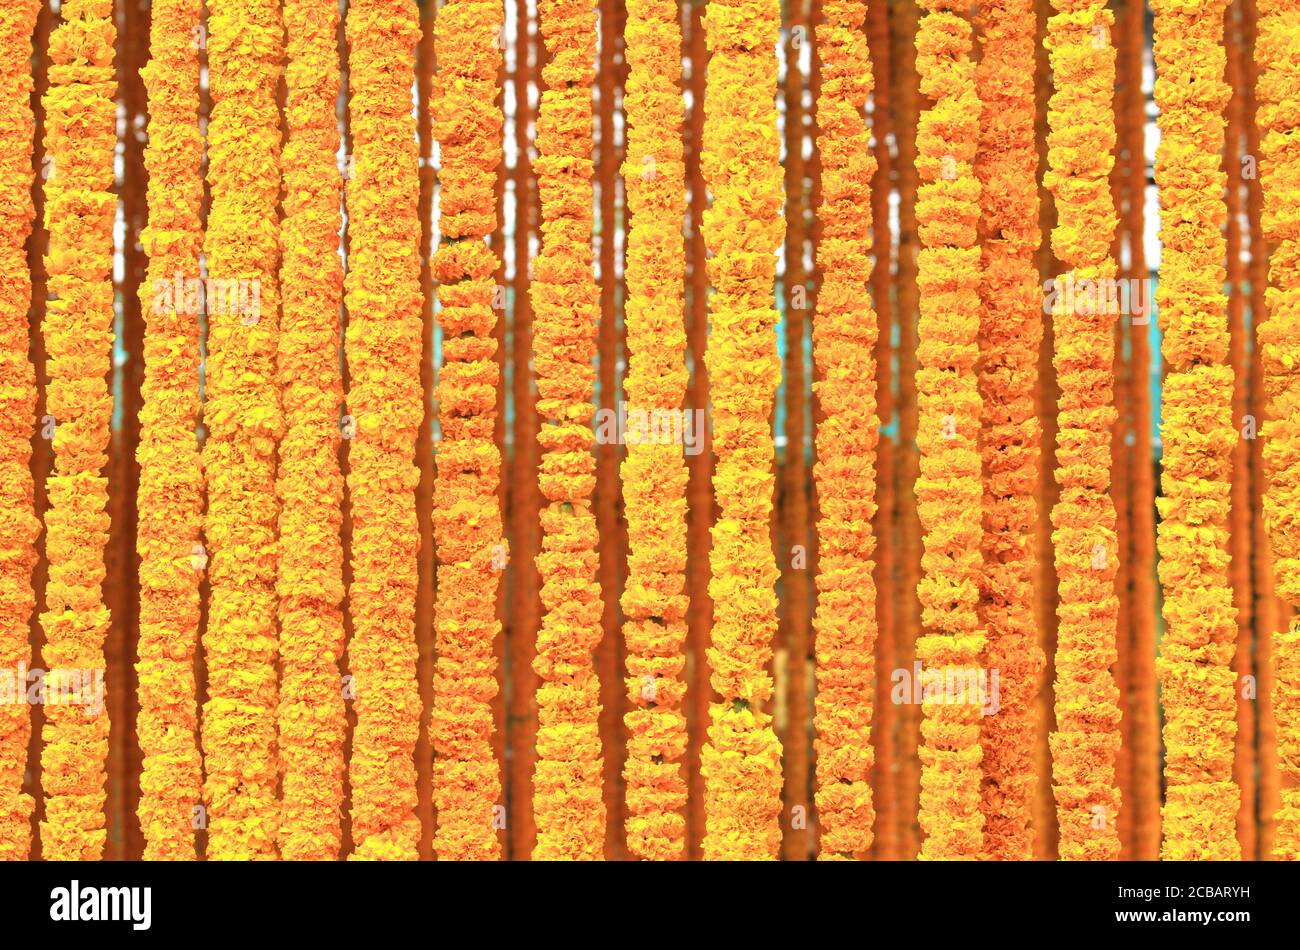 Yellow marigold flower background Stock Photo - Alamy